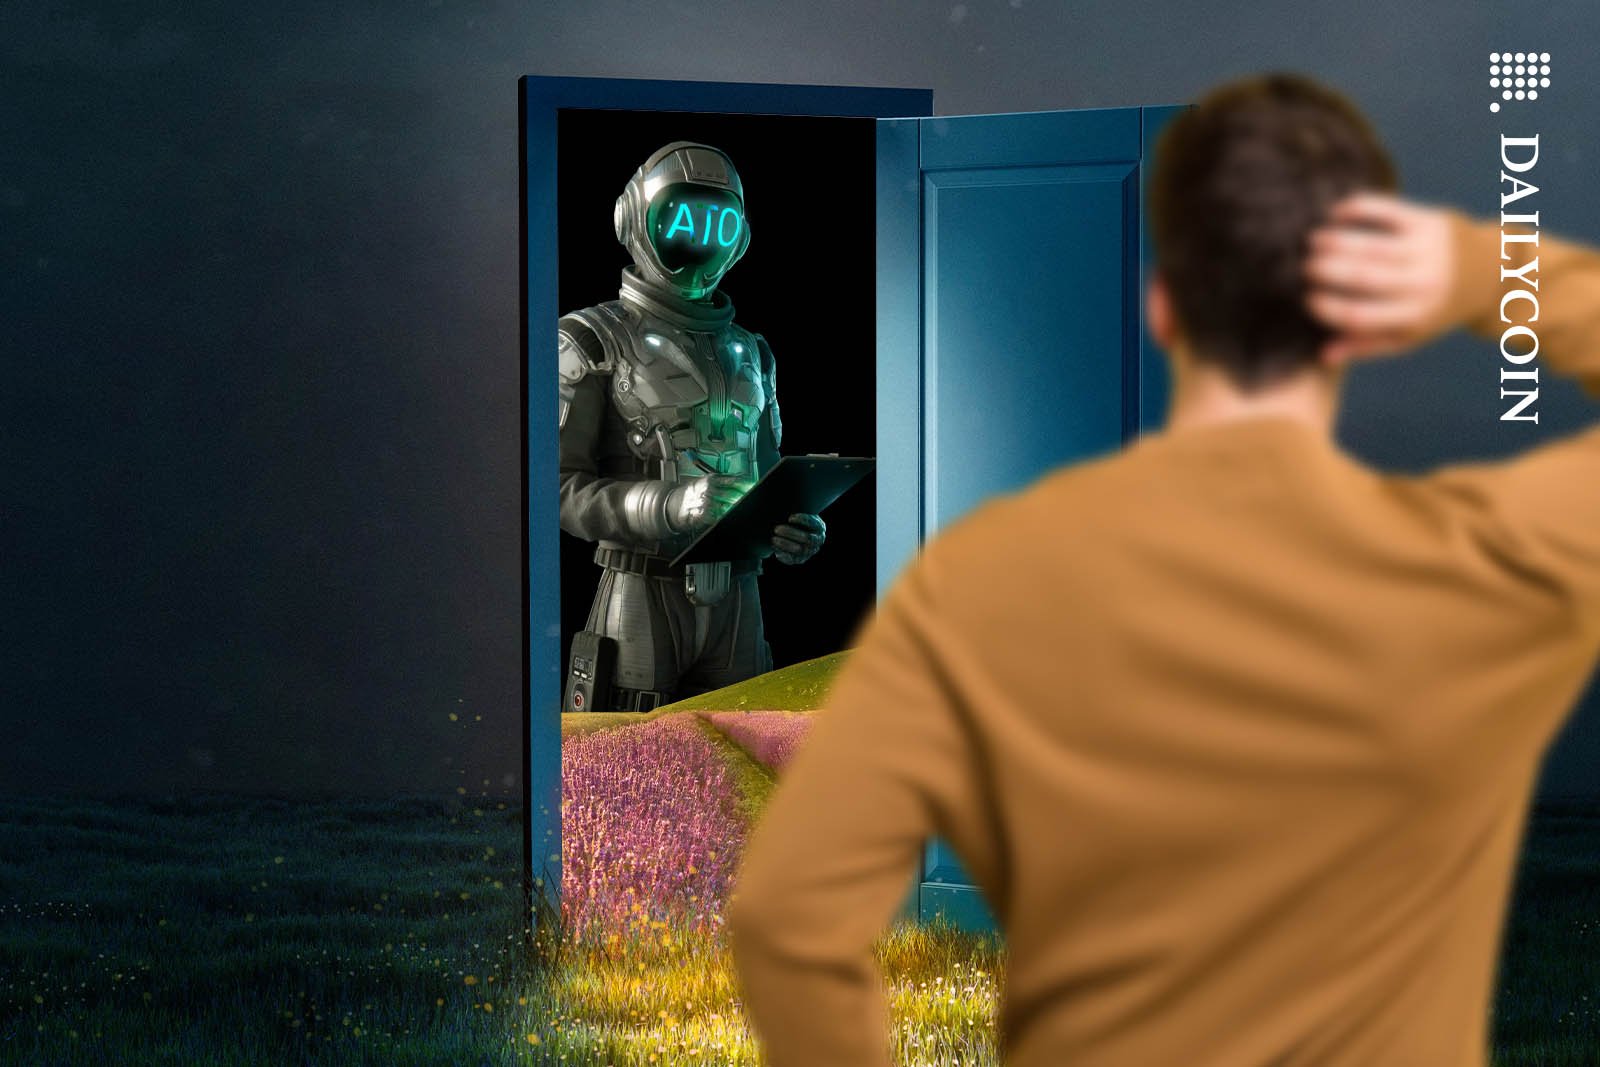 Australian Tax Officve robot showing up at a man's doorstep.